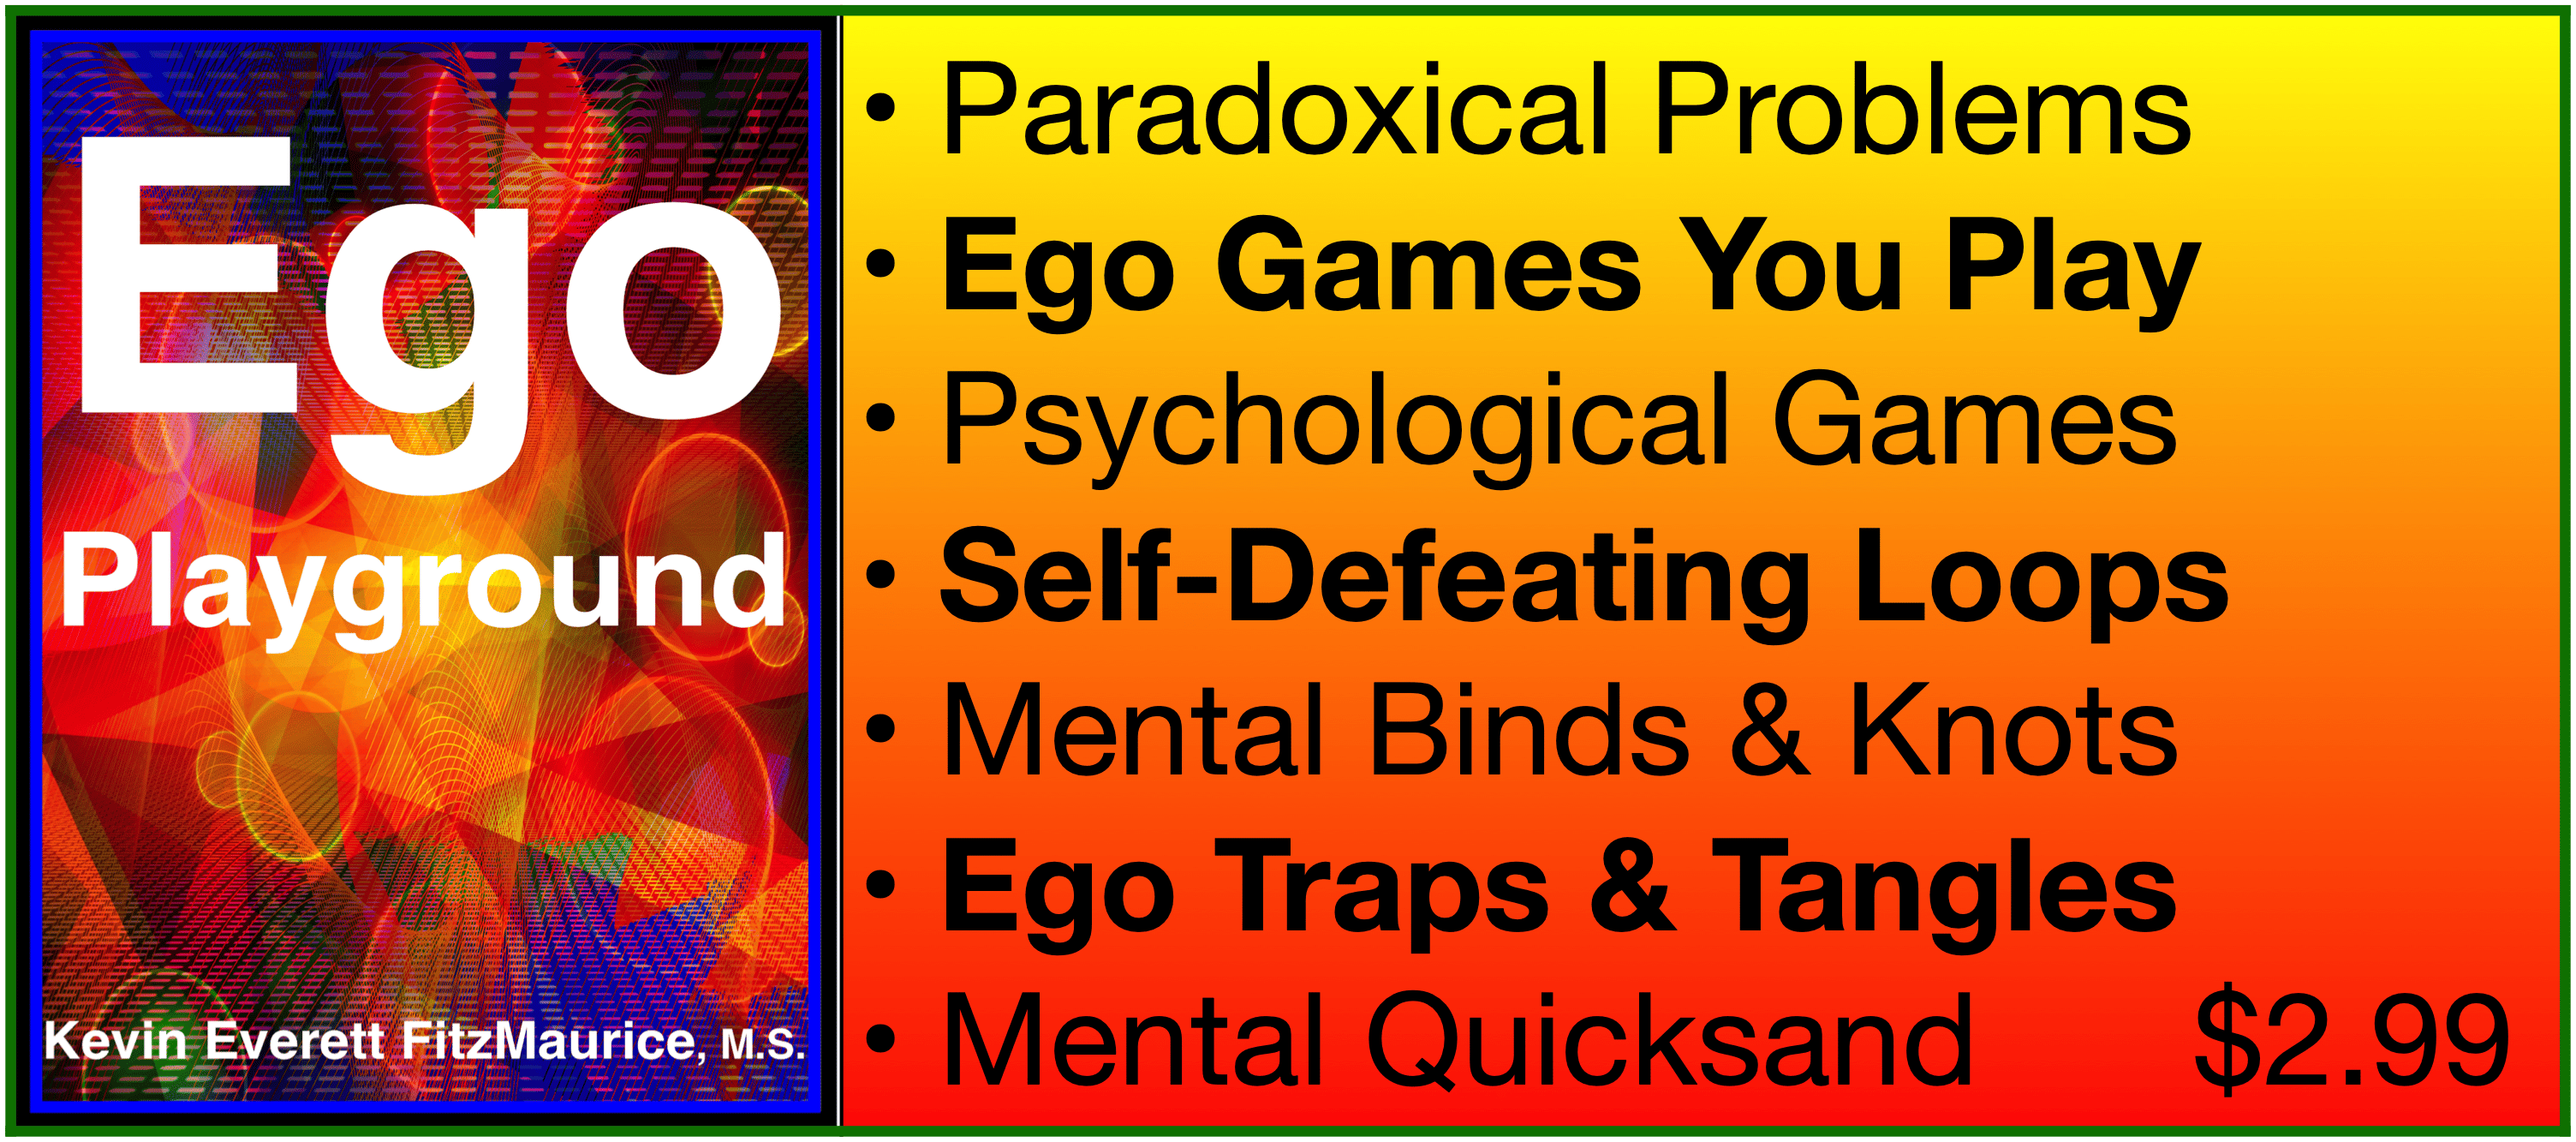 Ego Playground exposing ego games using poetry